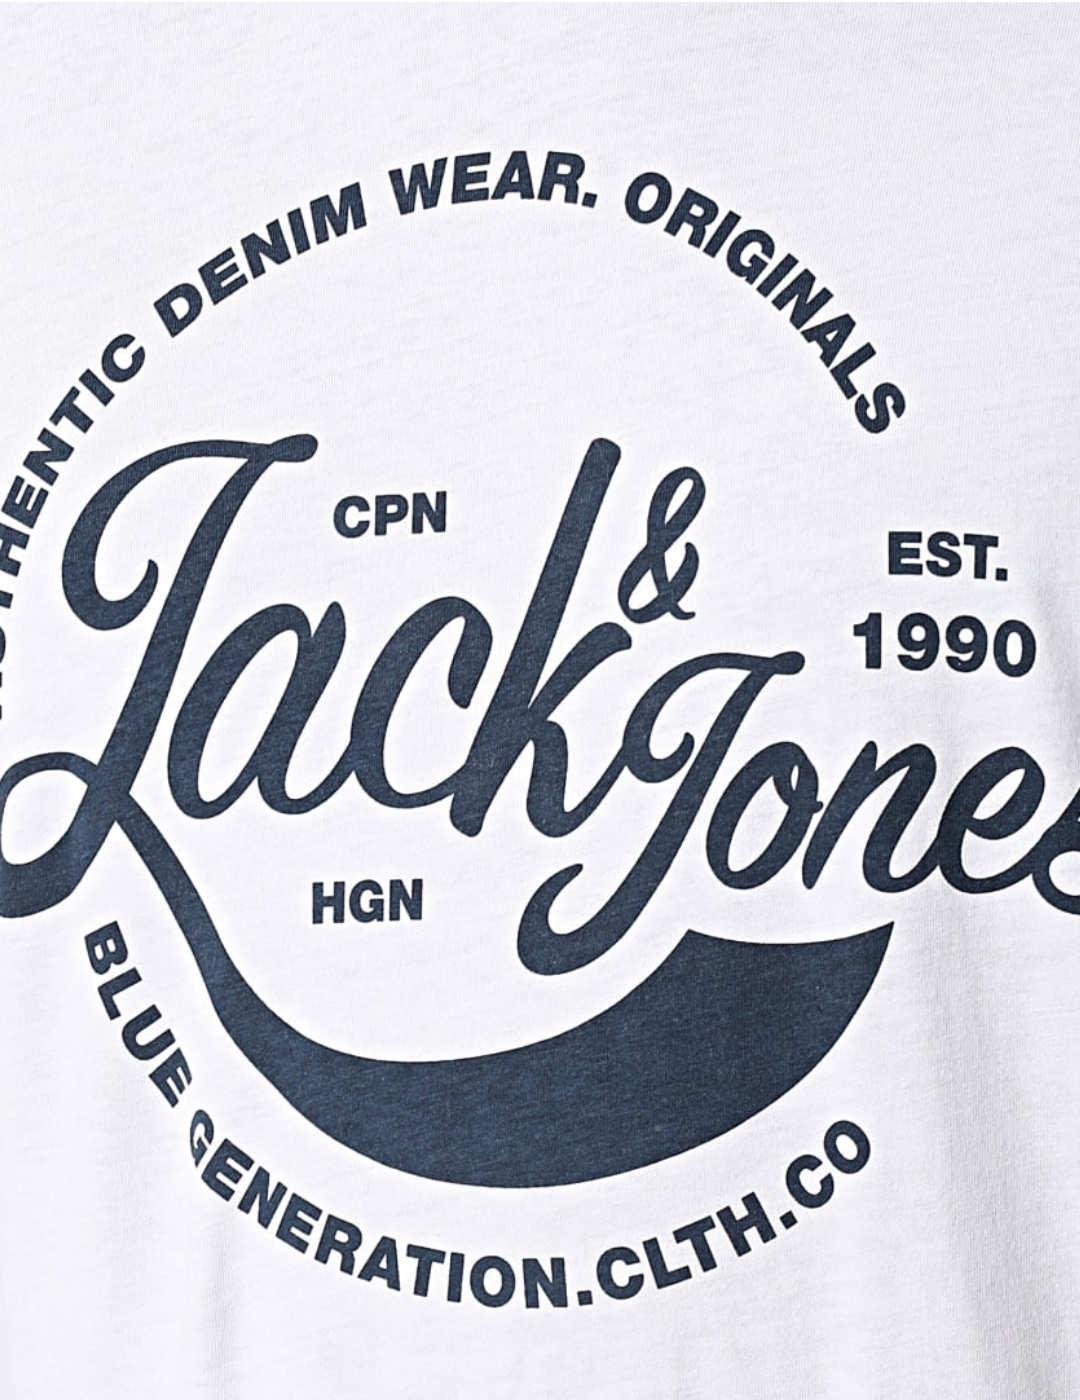 Camiseta Jack&Jones Mbappe blanco para hombre-b